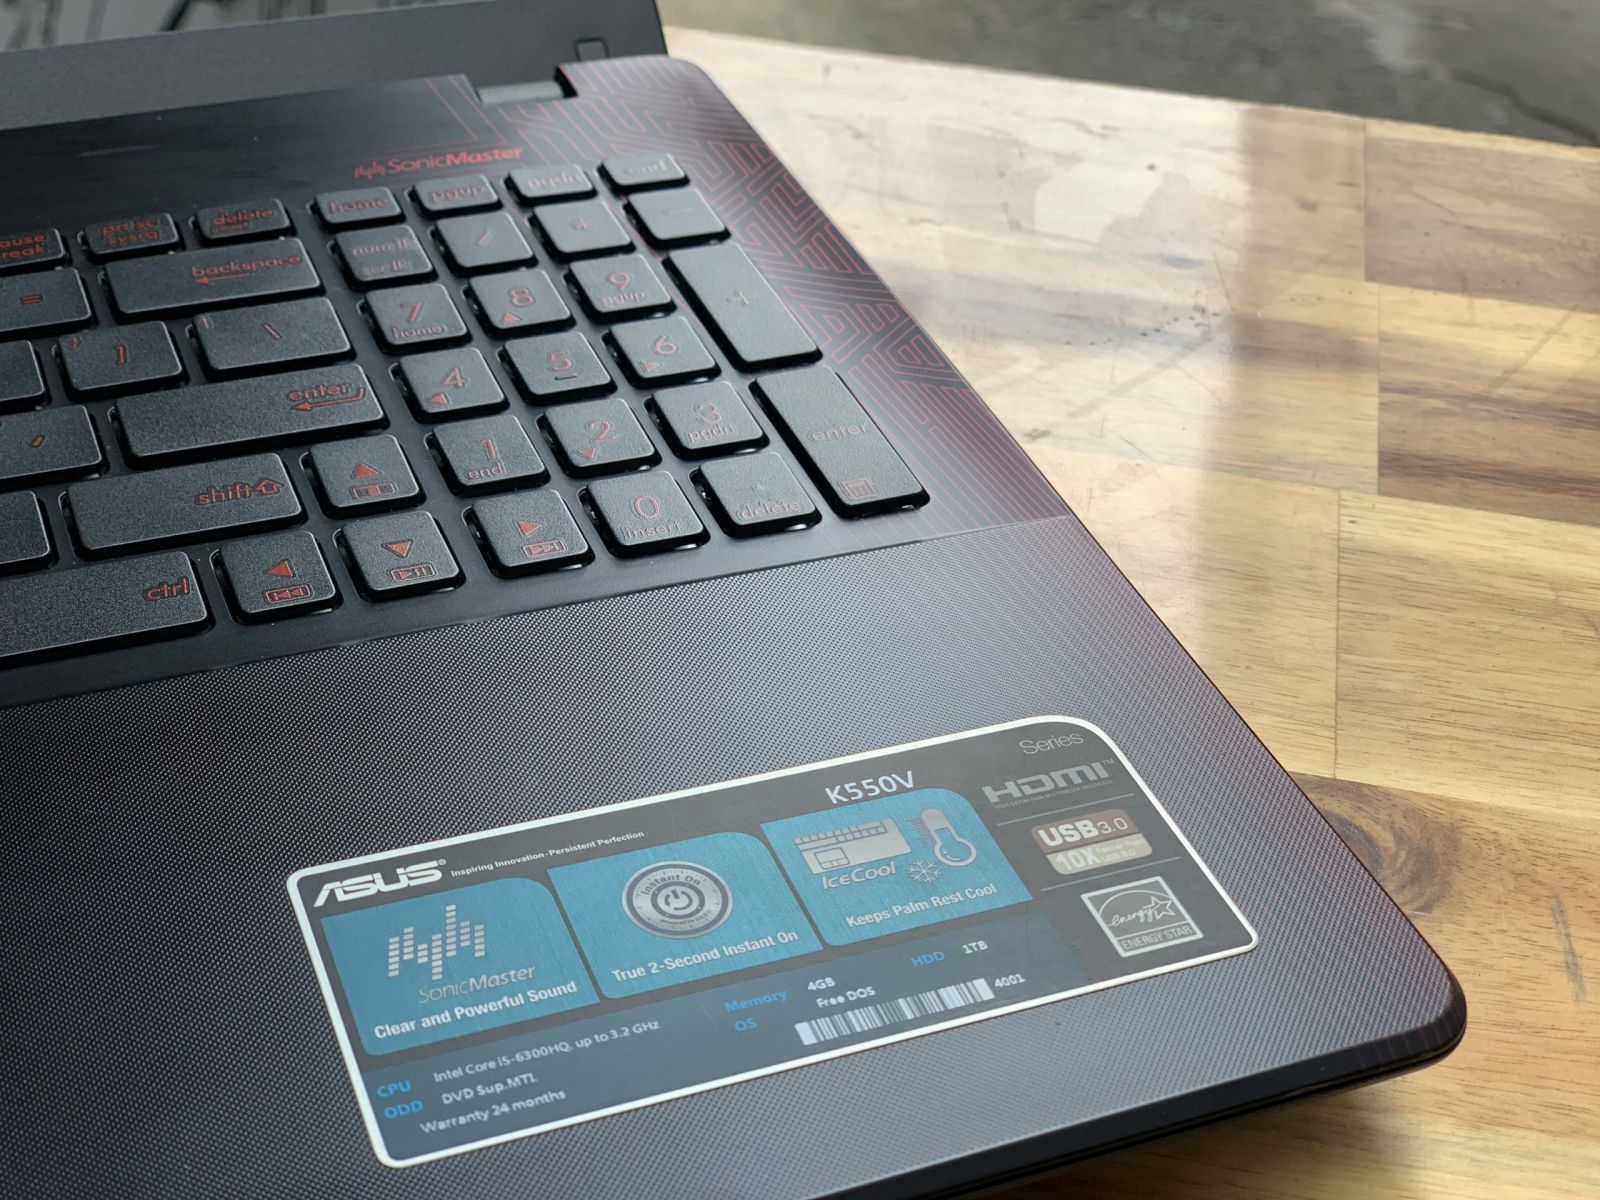 Laptop Asus K550V, i5 6300HQ 4G 1000G Vga GTX950M Đẹp zin 100% Giá rẻ - 3